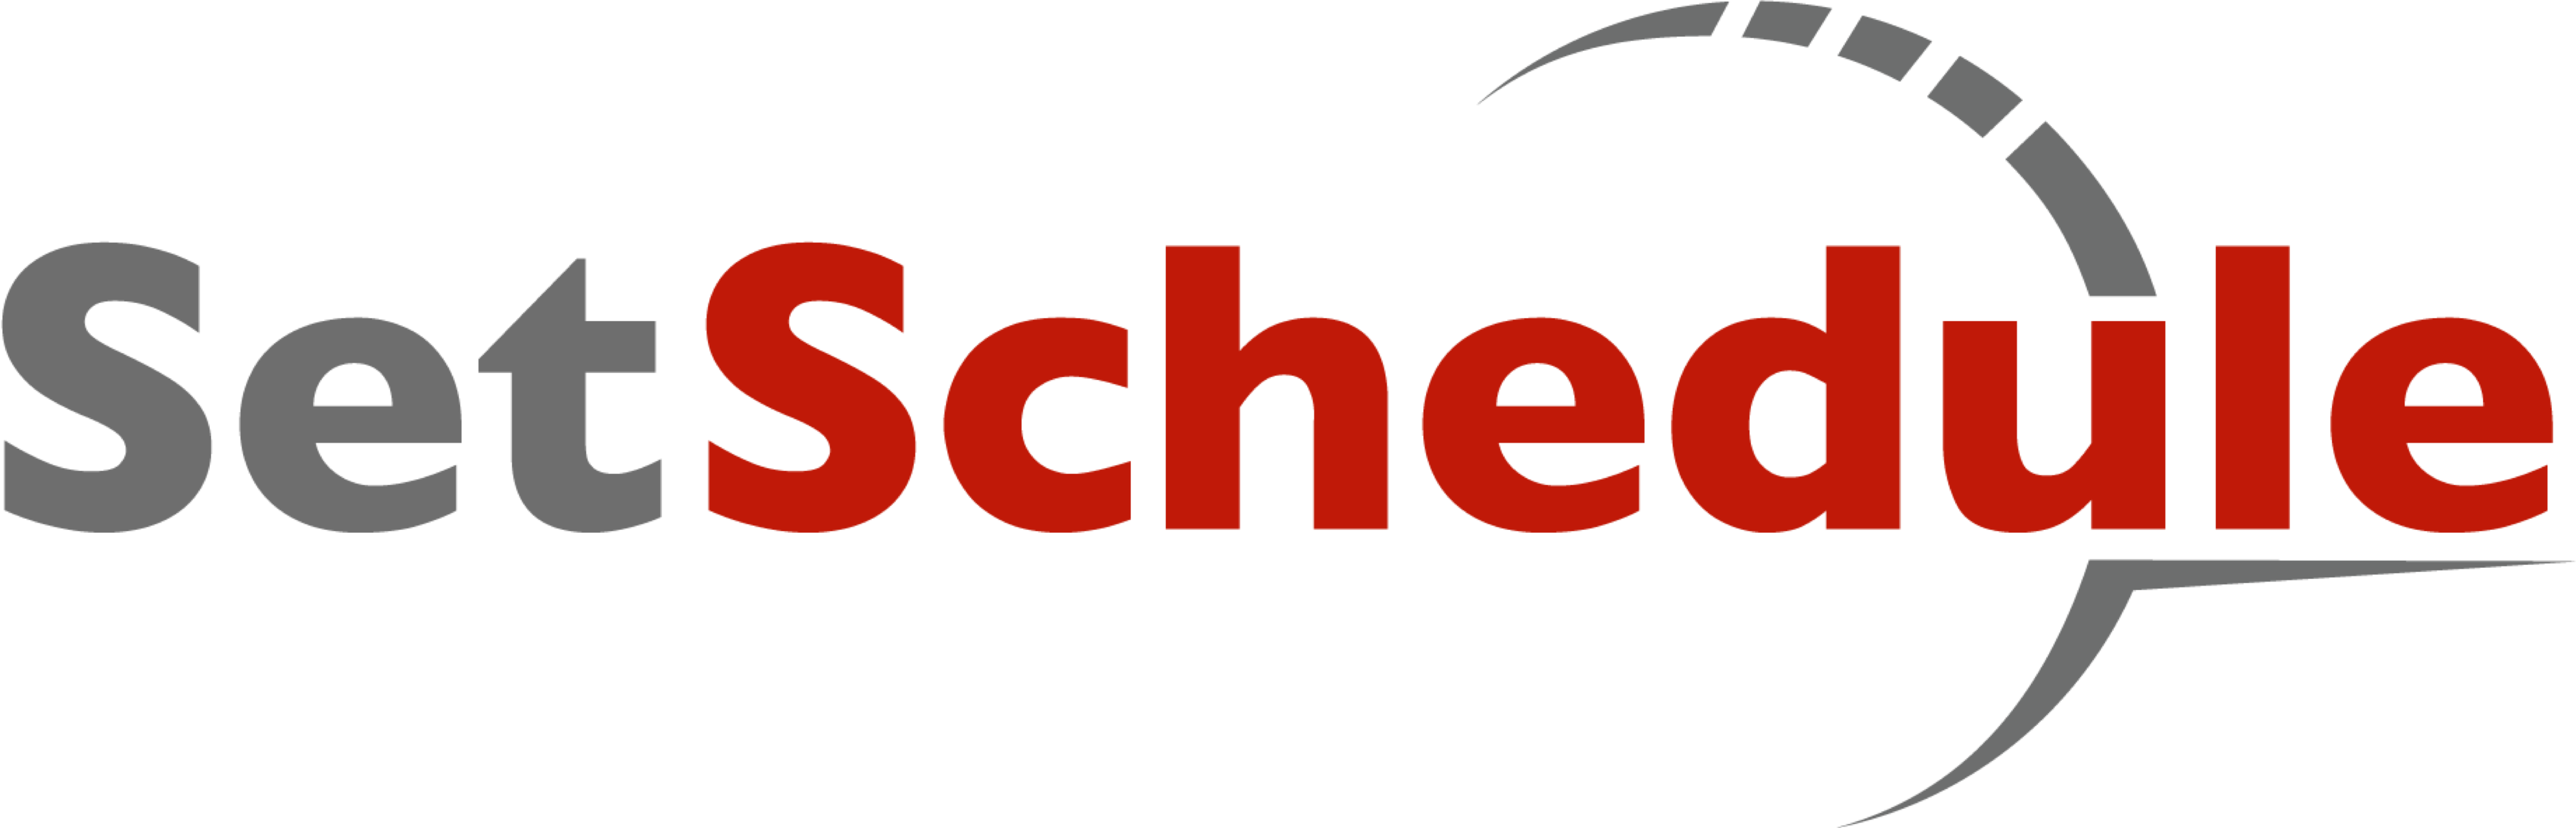 SetSchedule Logo